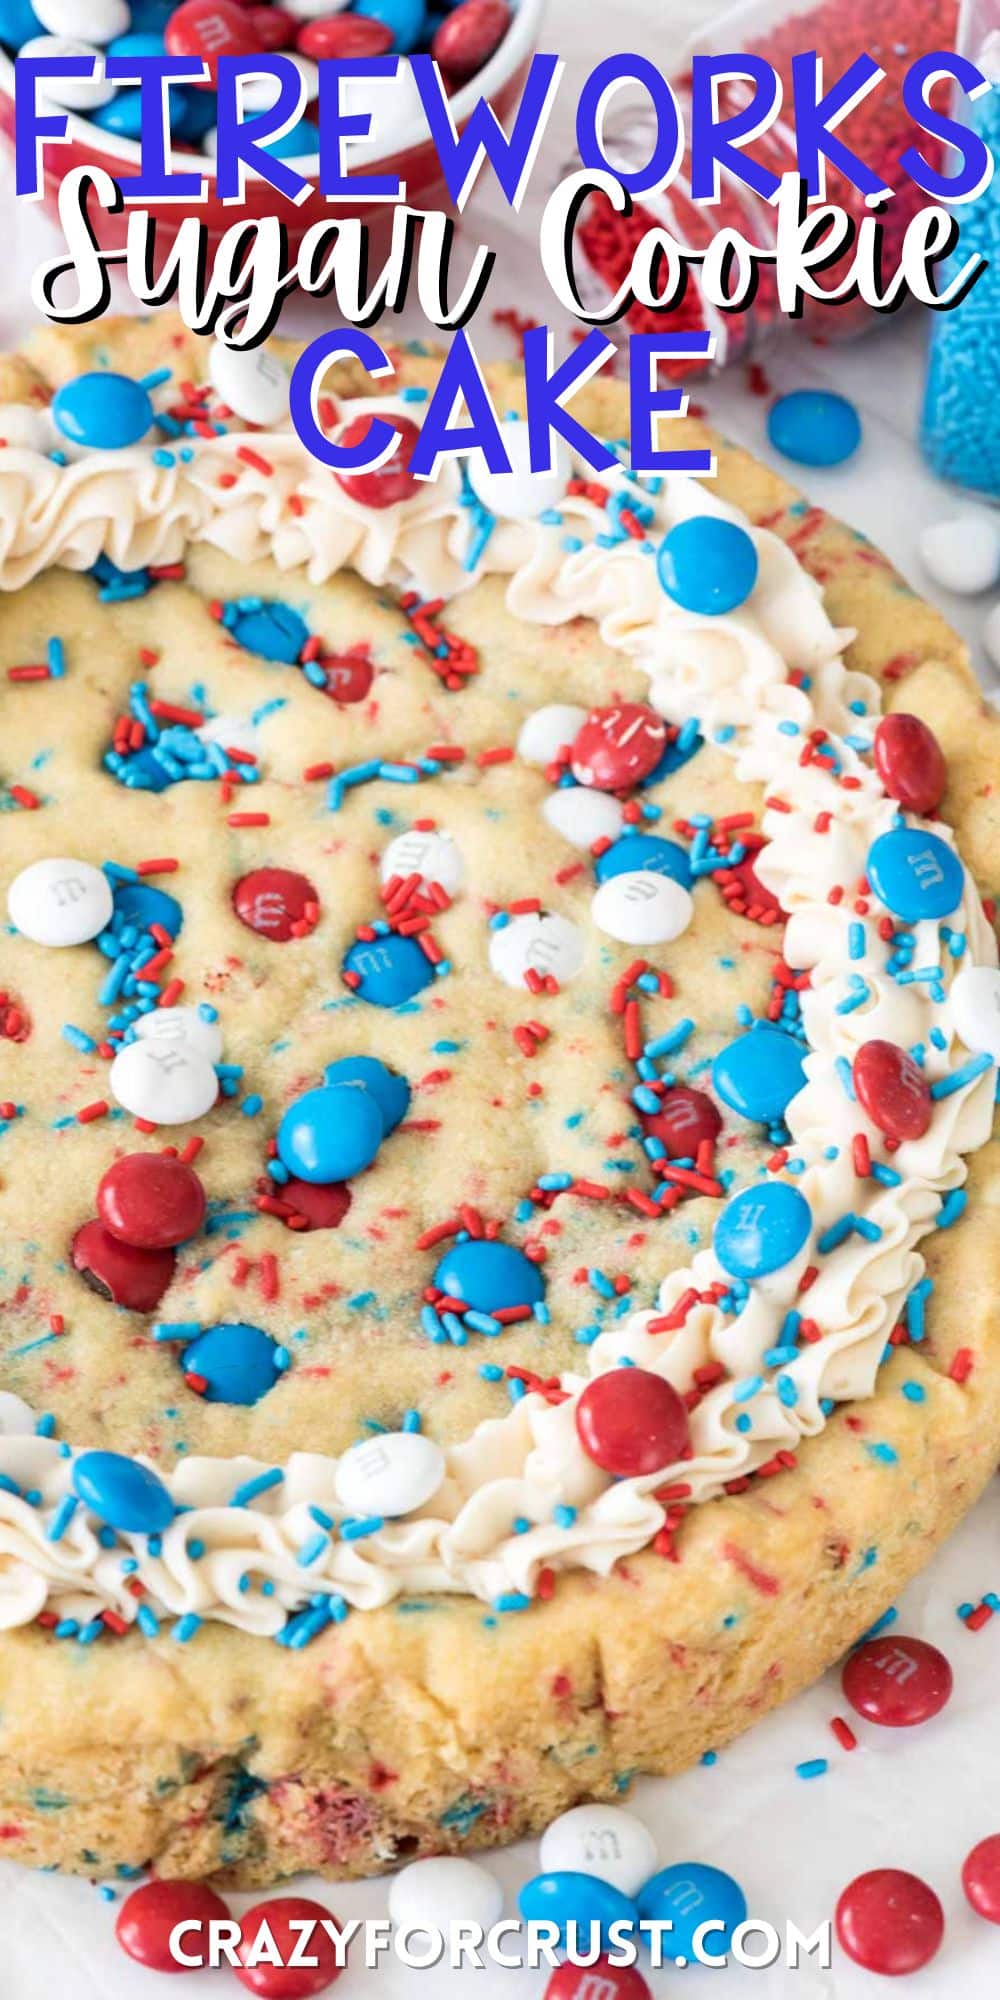 Fireworks Sugar Cookie Cake - Crazy for Crust